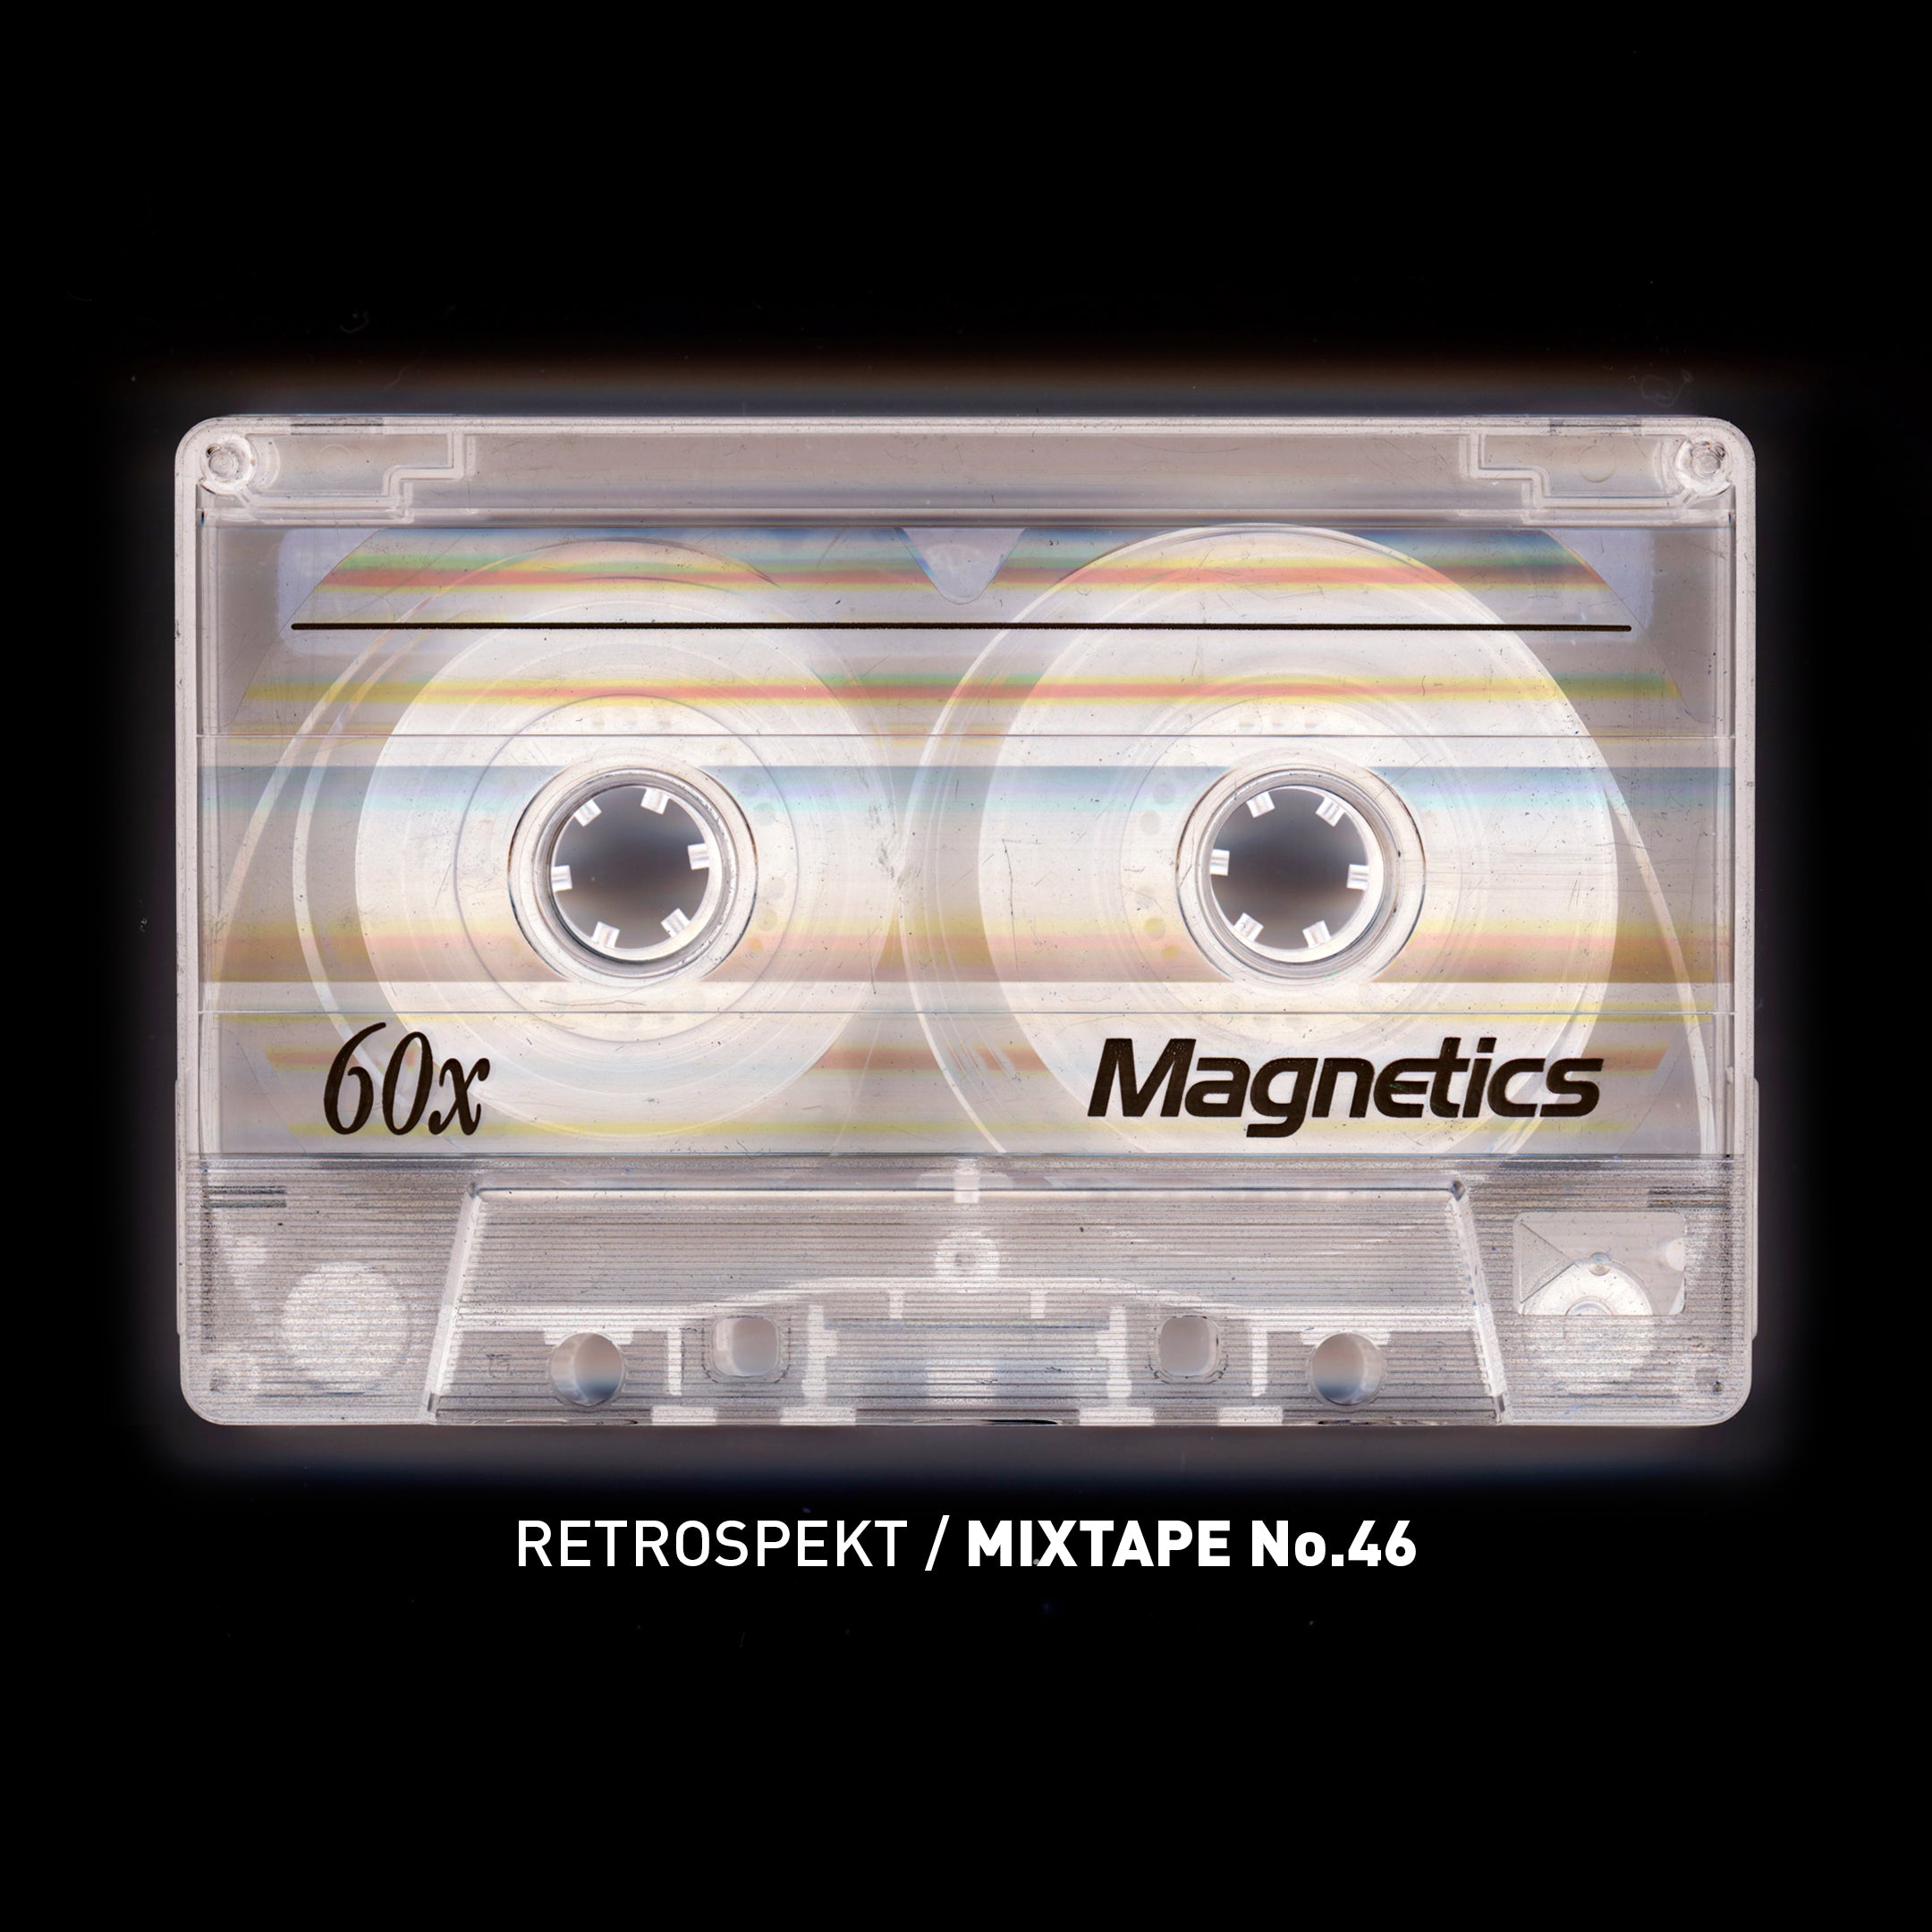 Retrospekt Mixtape No. 46